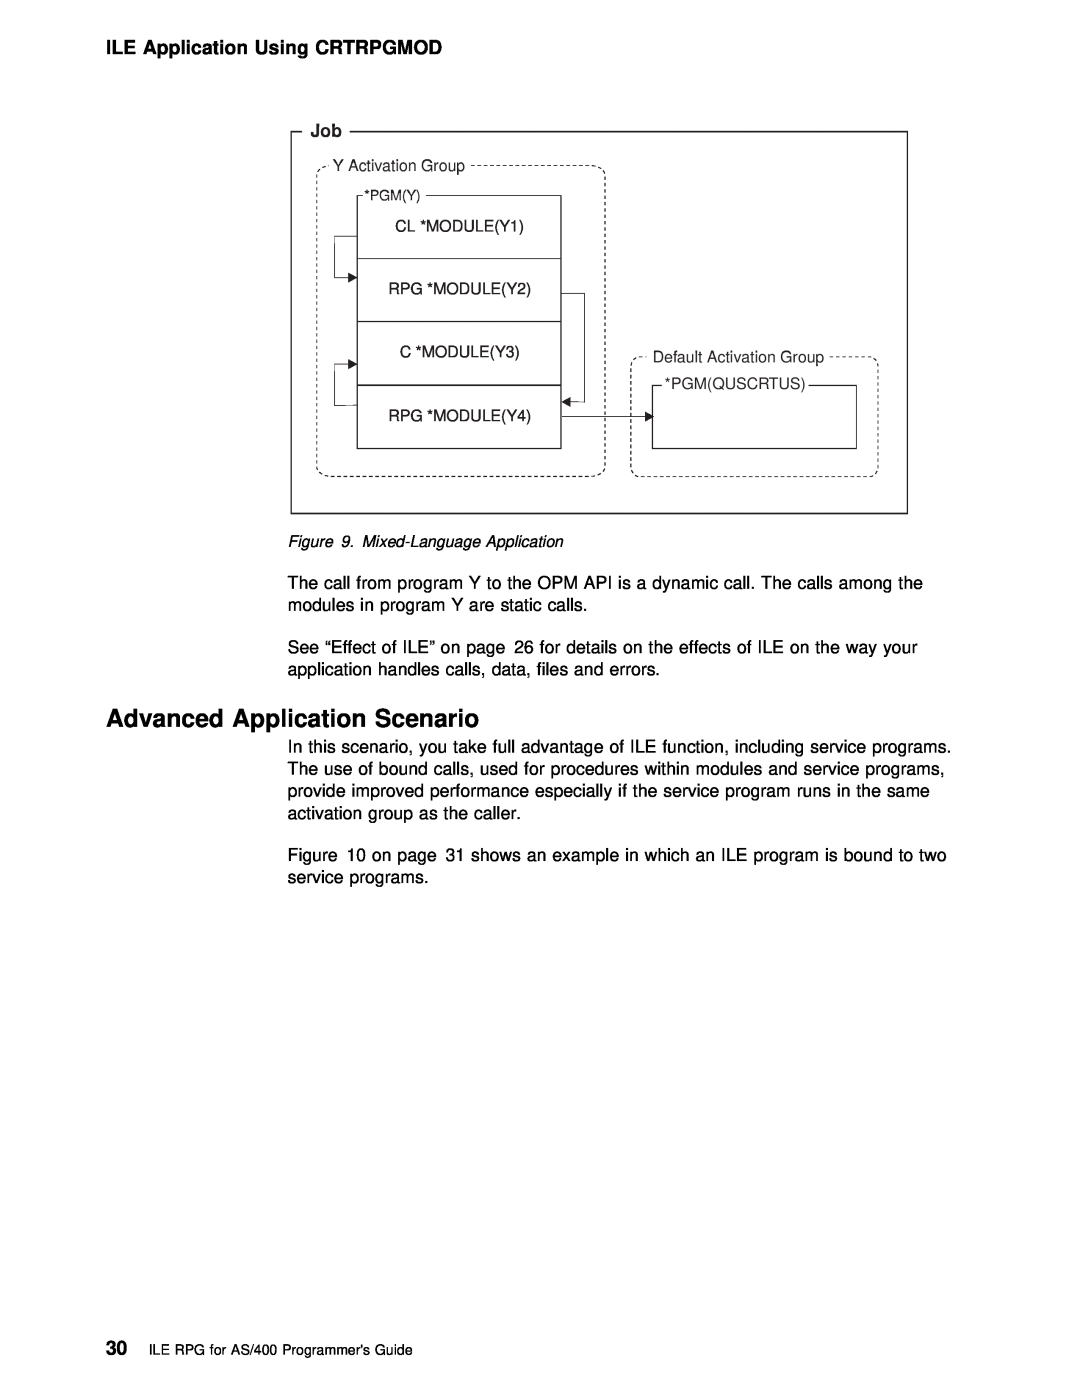 IBM AS/400 manual Advanced Application Scenario, ILE Application Using CRTRPGMOD, Mixed-Language Application 